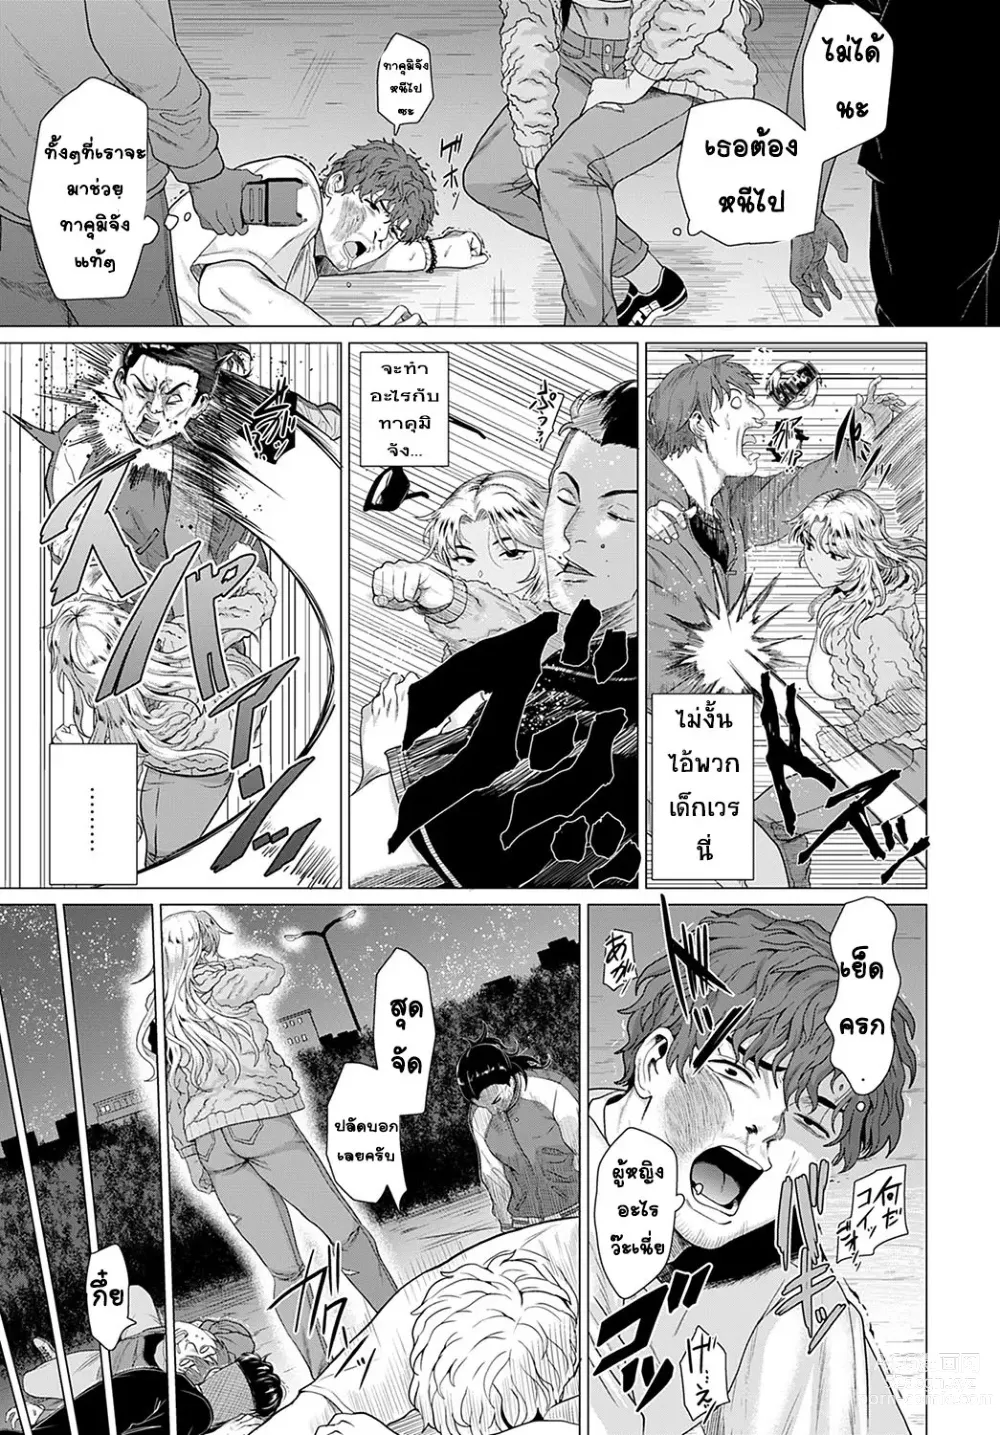 Page 7 of manga Douzo, Okawarinaku.